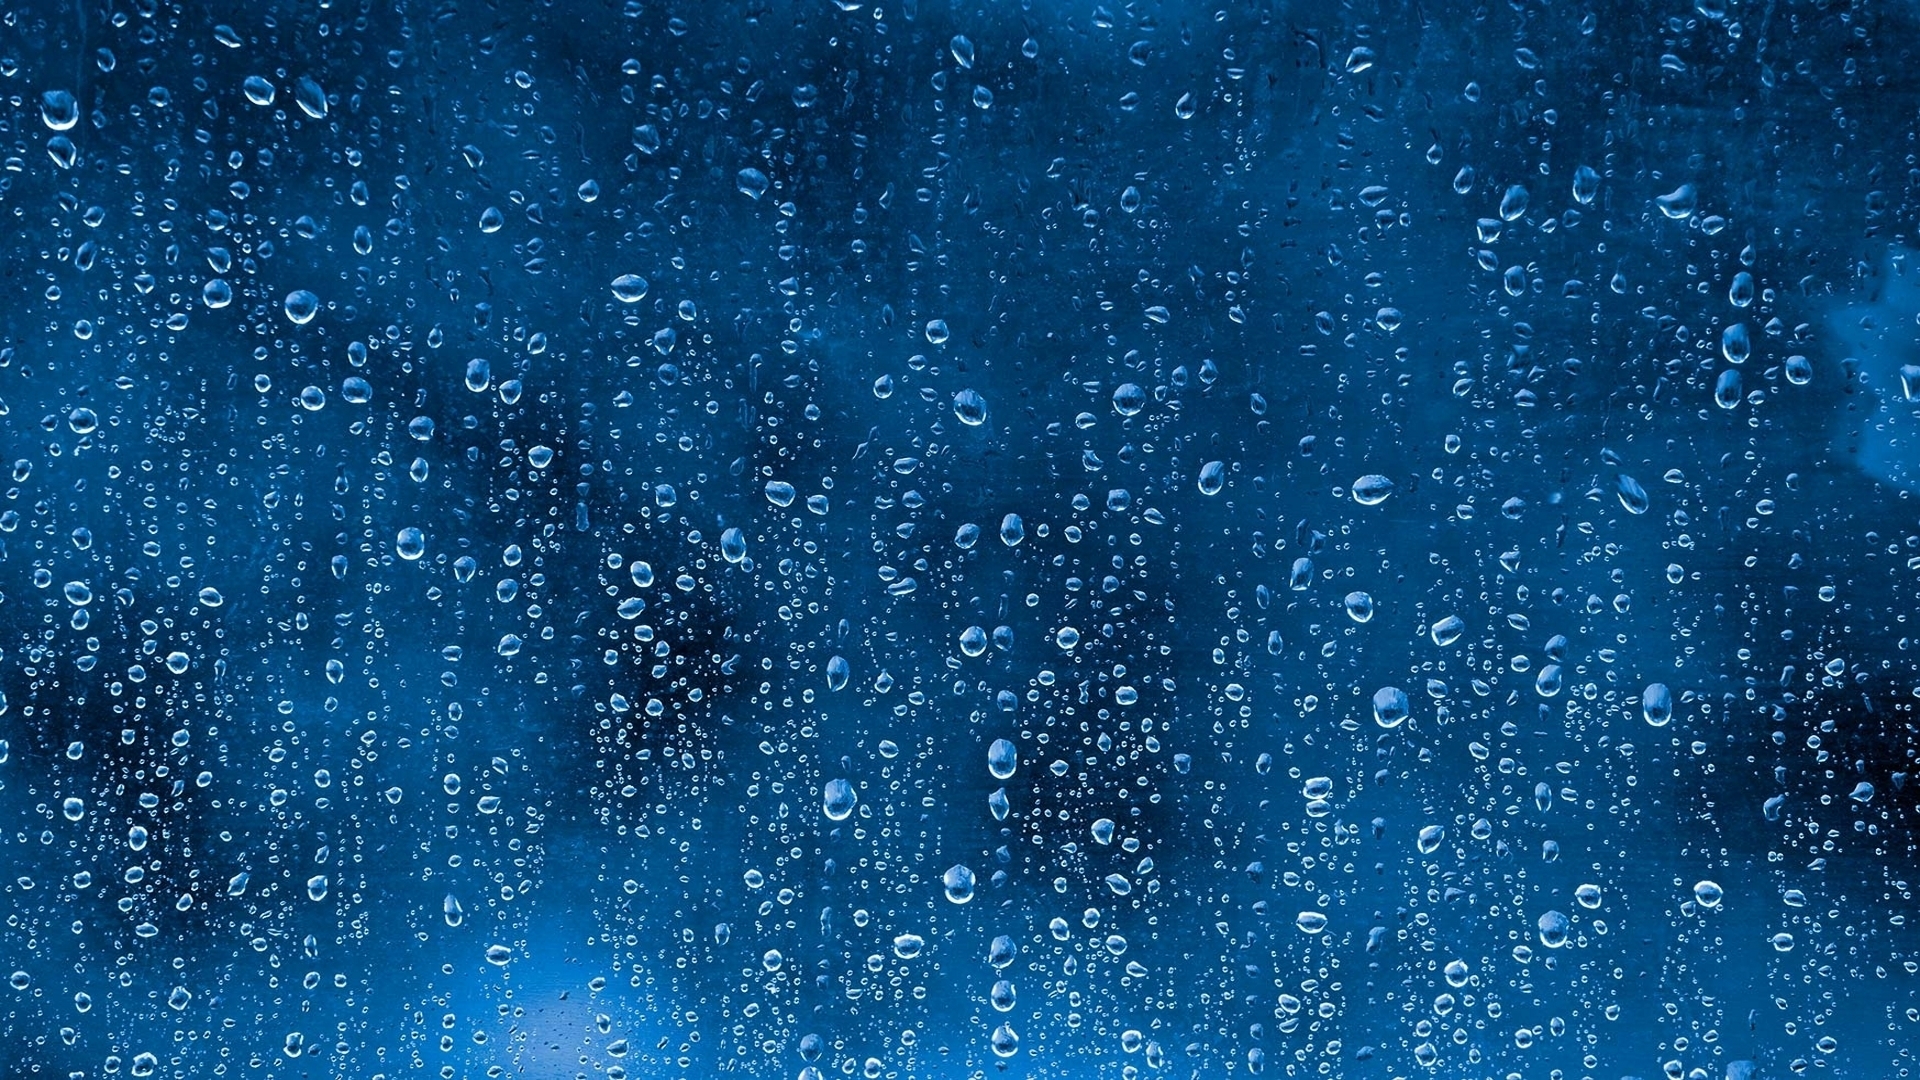 Storms Rain Window Glass Reflection Abstract Bokeh